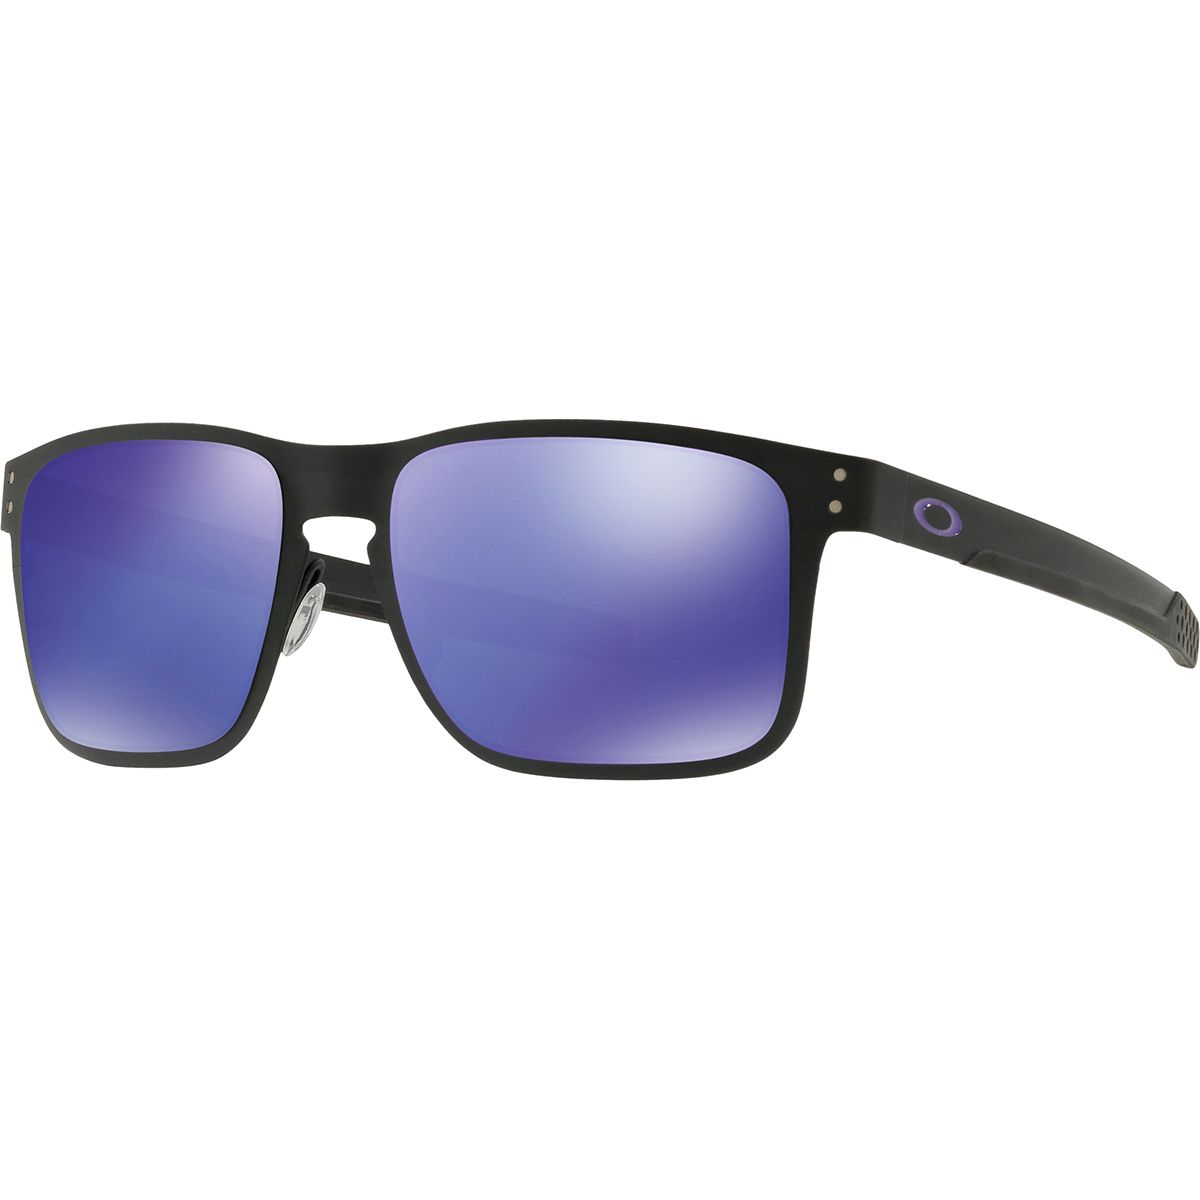 Oakley Holbrook Metal Sunglasses - Men's